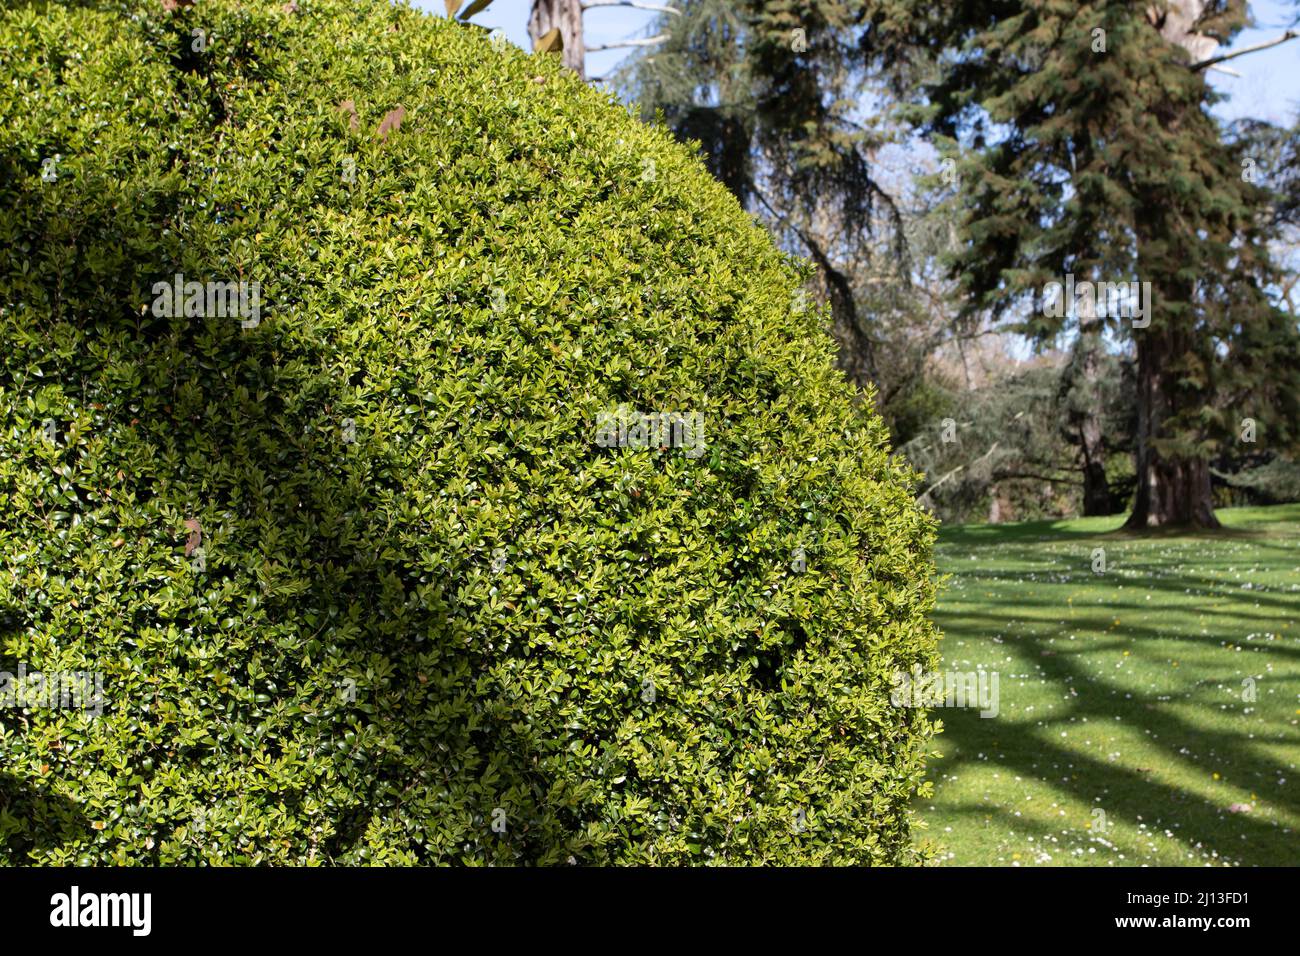 Buxus sempervirens topiary in the sunny garden. Common box, European box, or boxwood evergreen pruned shrub. Stock Photo